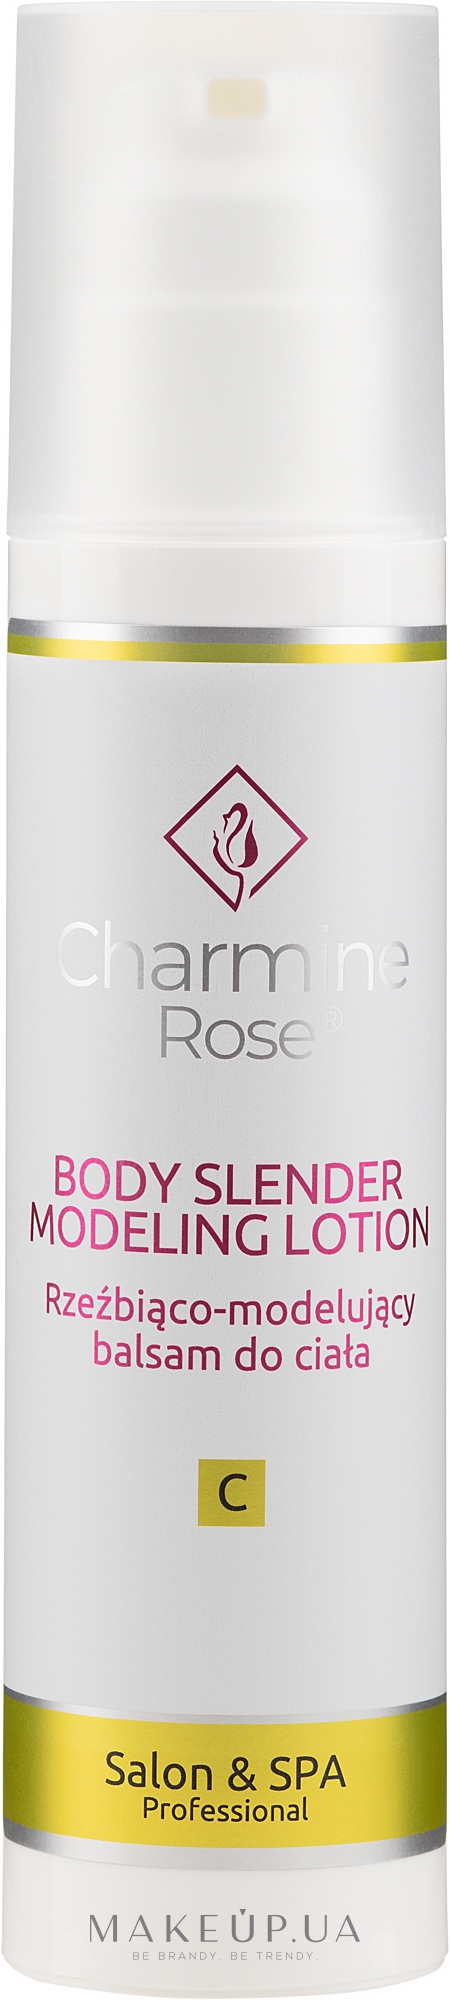 Моделирующий лосьон для тела - Charmine Rose Body Slender Modeling Lotion — фото 200ml